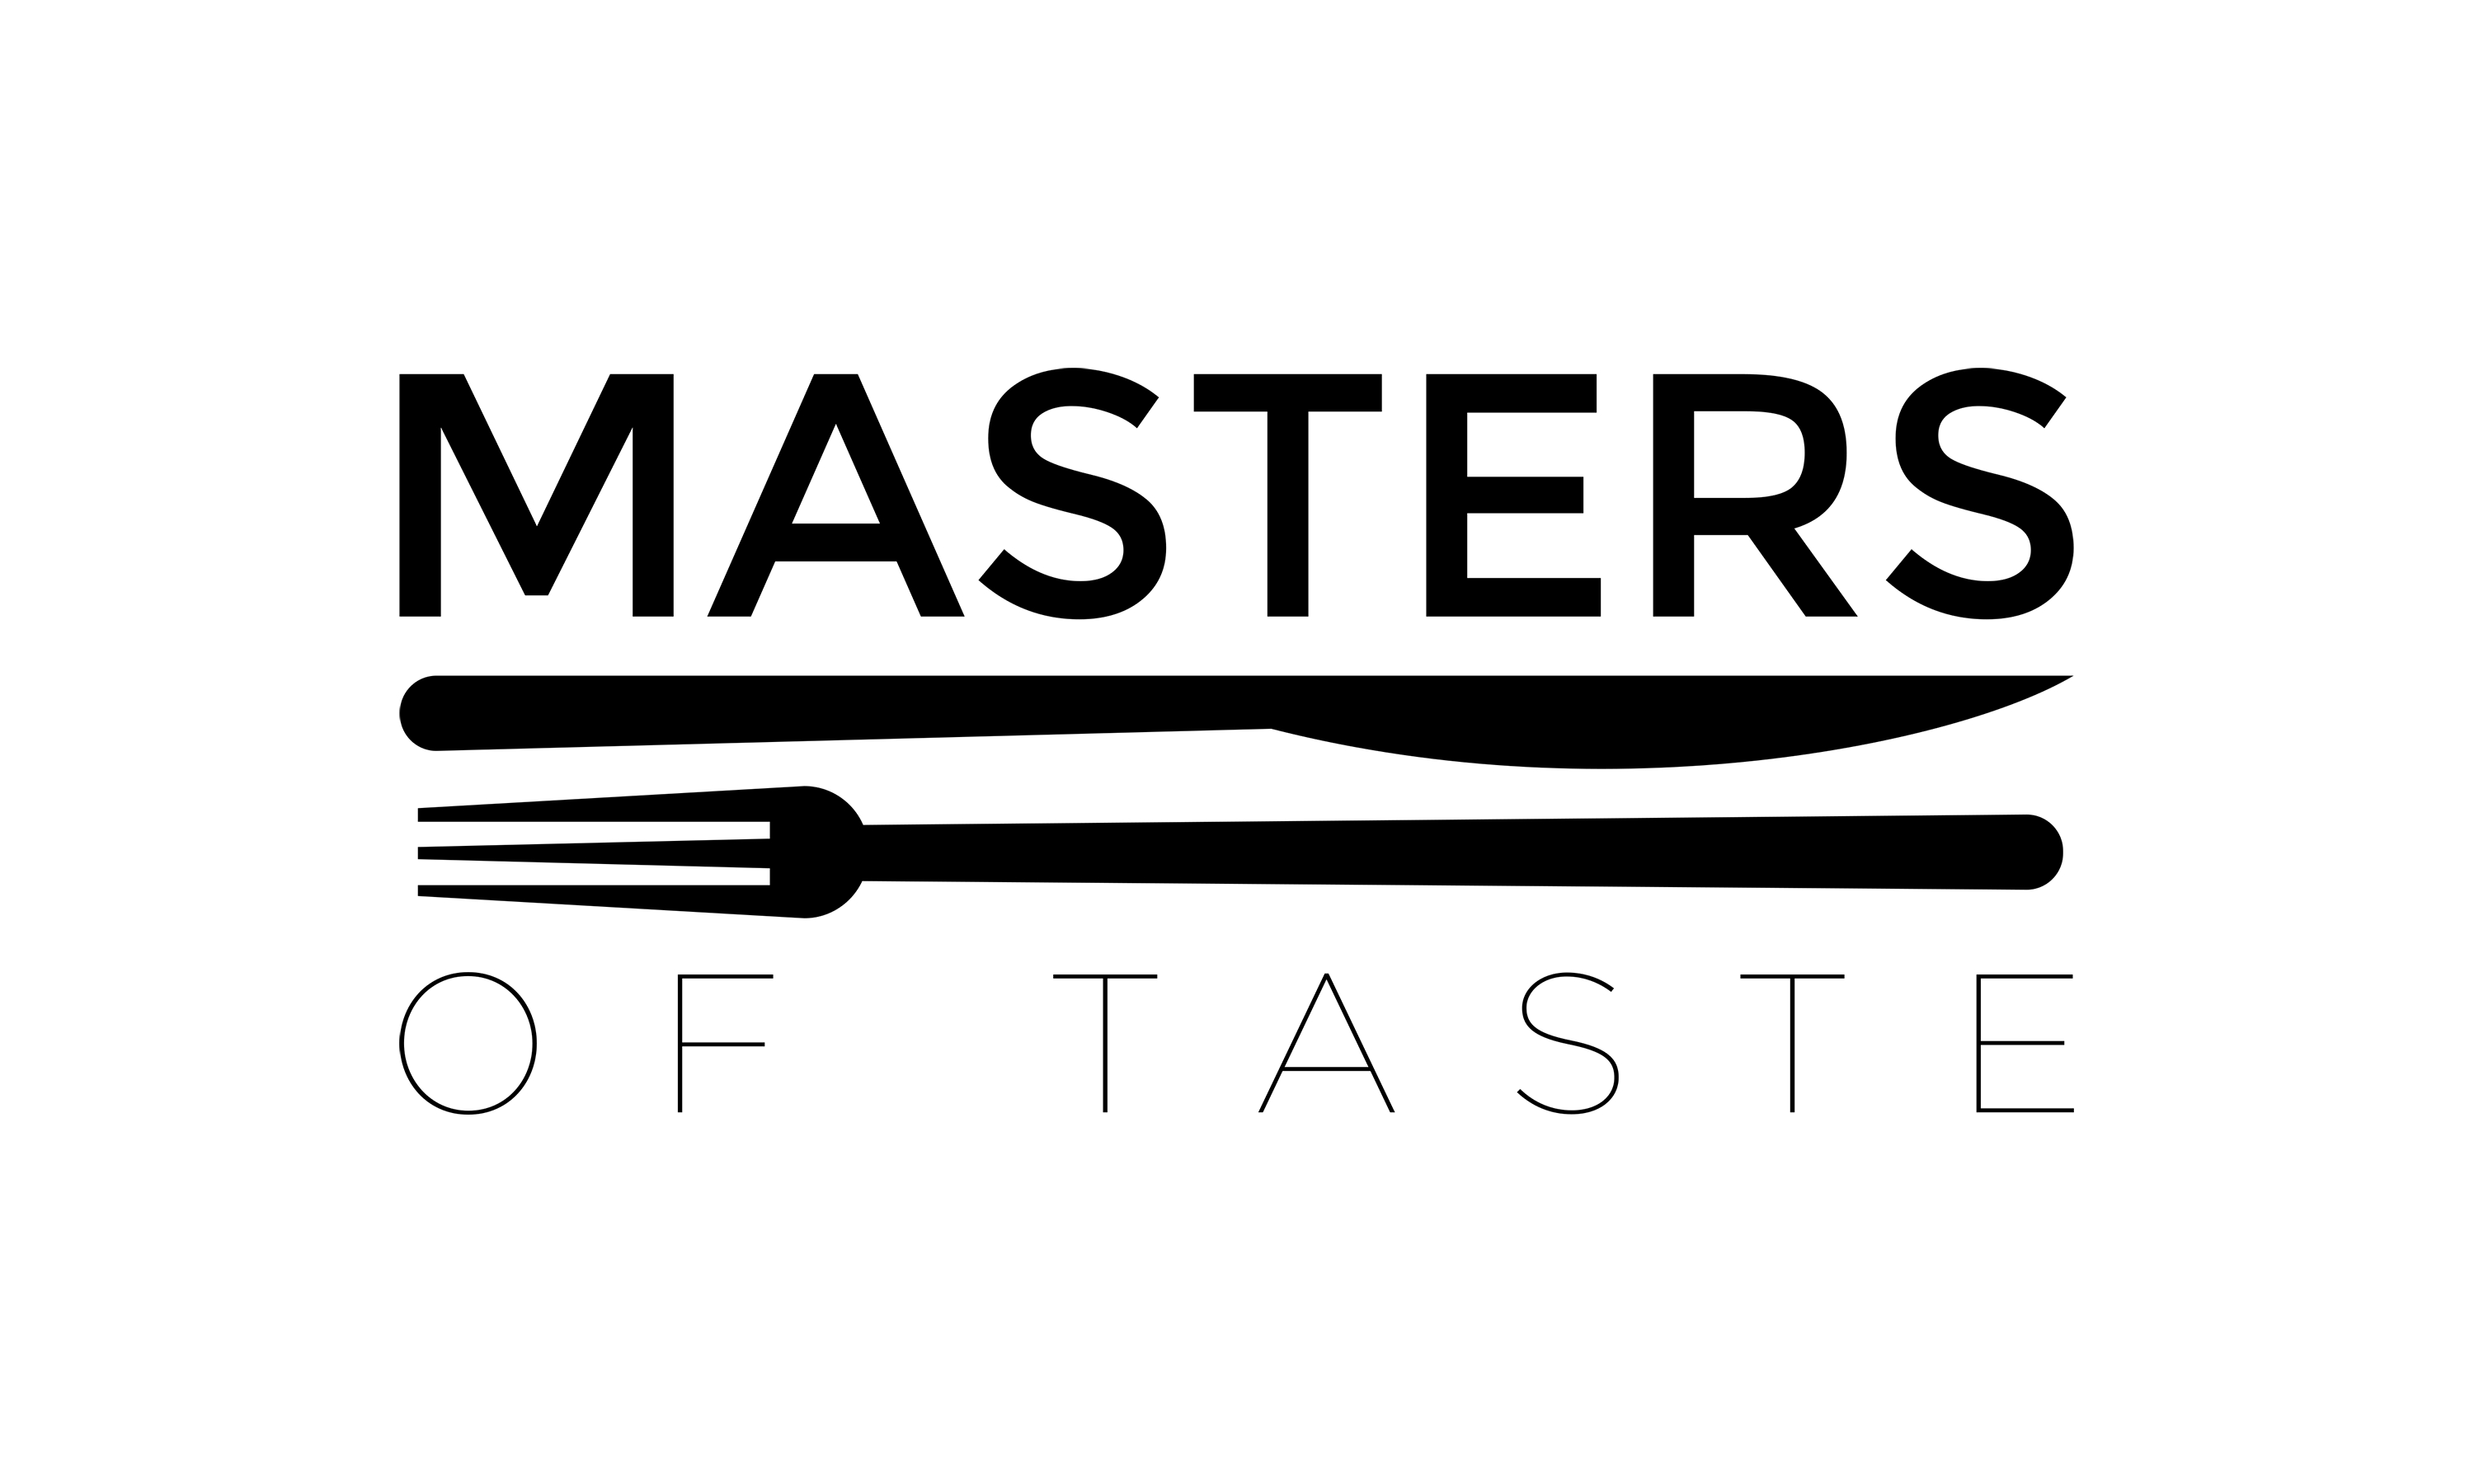 Masters of Taste Logo